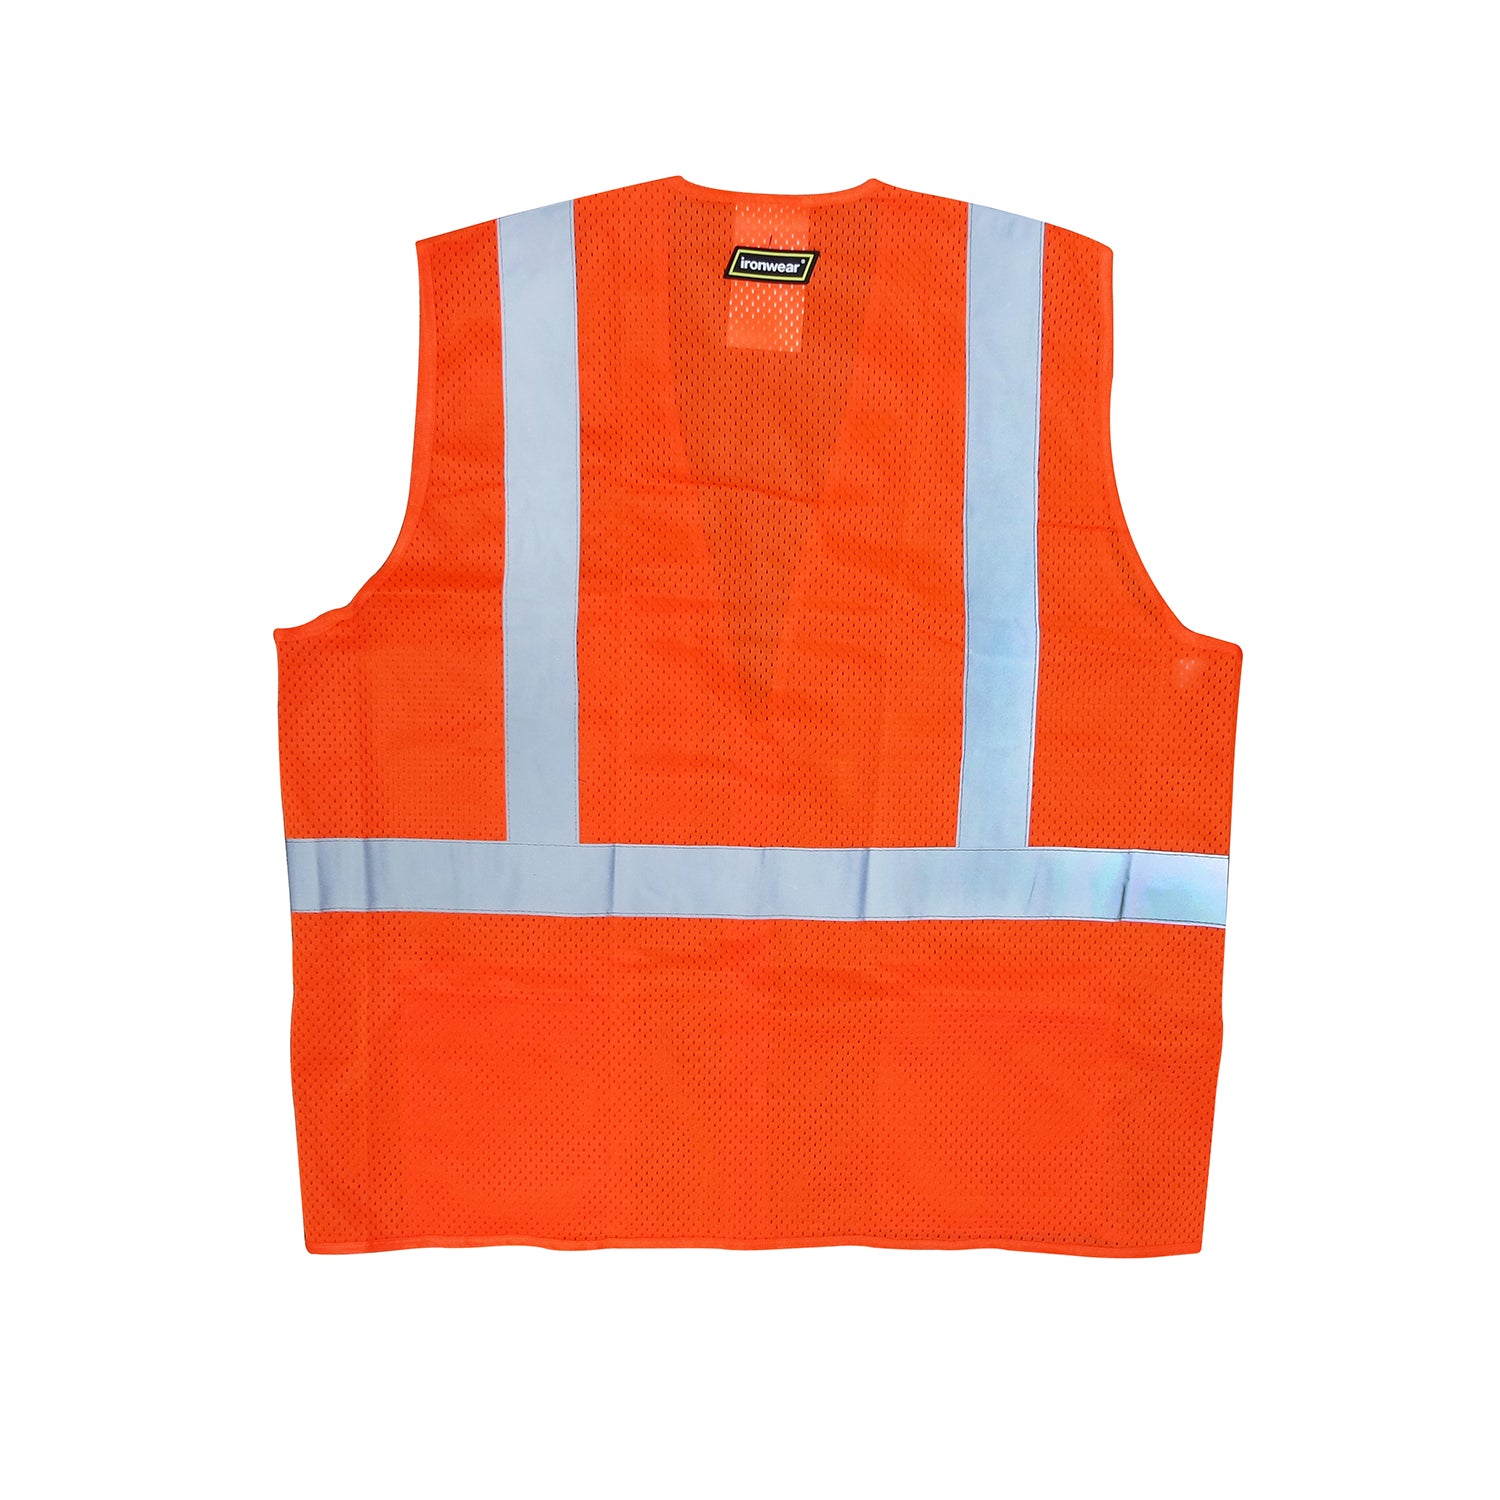 Ironwear Safety Vest, ANSI Class 2 - Orange Mesh, Silver Stripe -Safety- eGPS Solutions Inc.